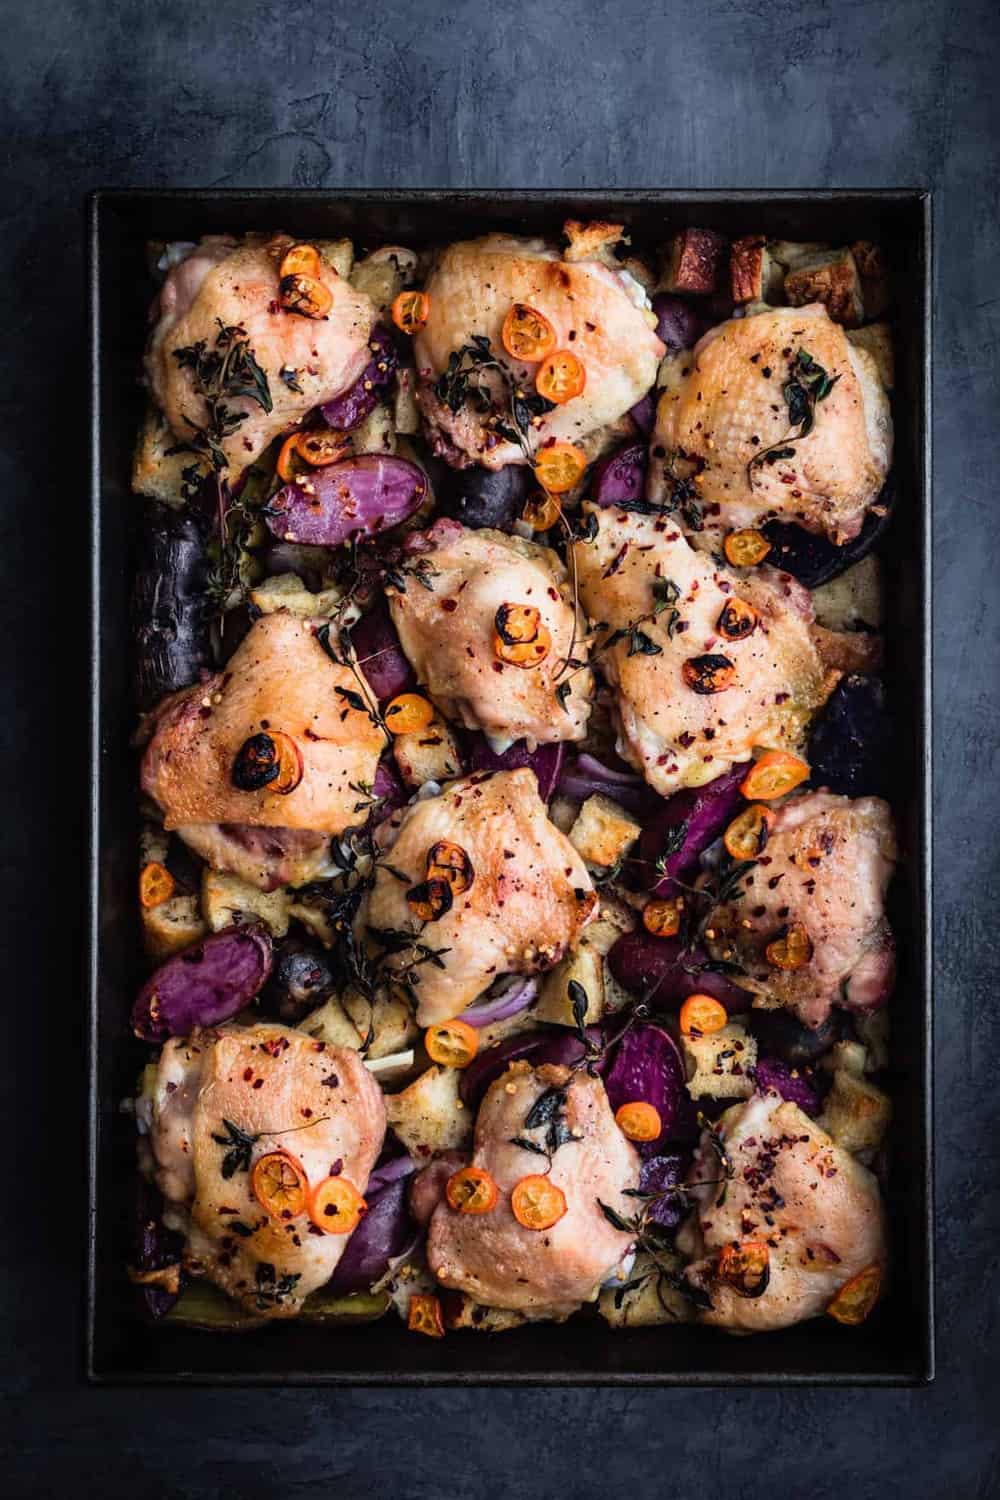 Sheet Pan with Chicken, Potatoes & Kumquats in baking tray, post oven.